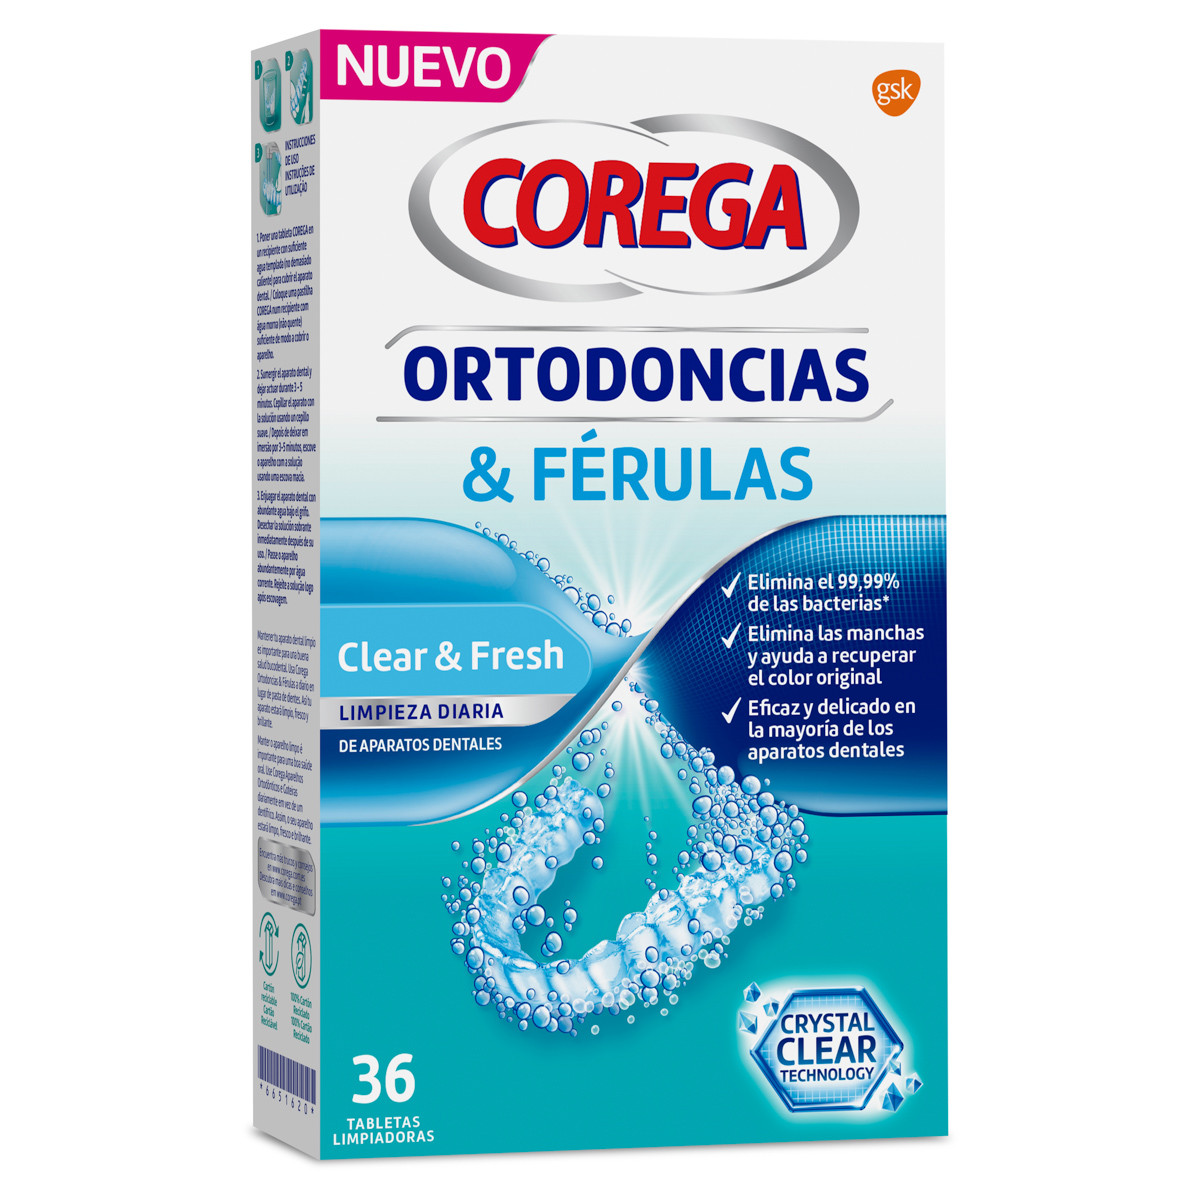 Imagen de Corega ortodoncias 36 tabletas